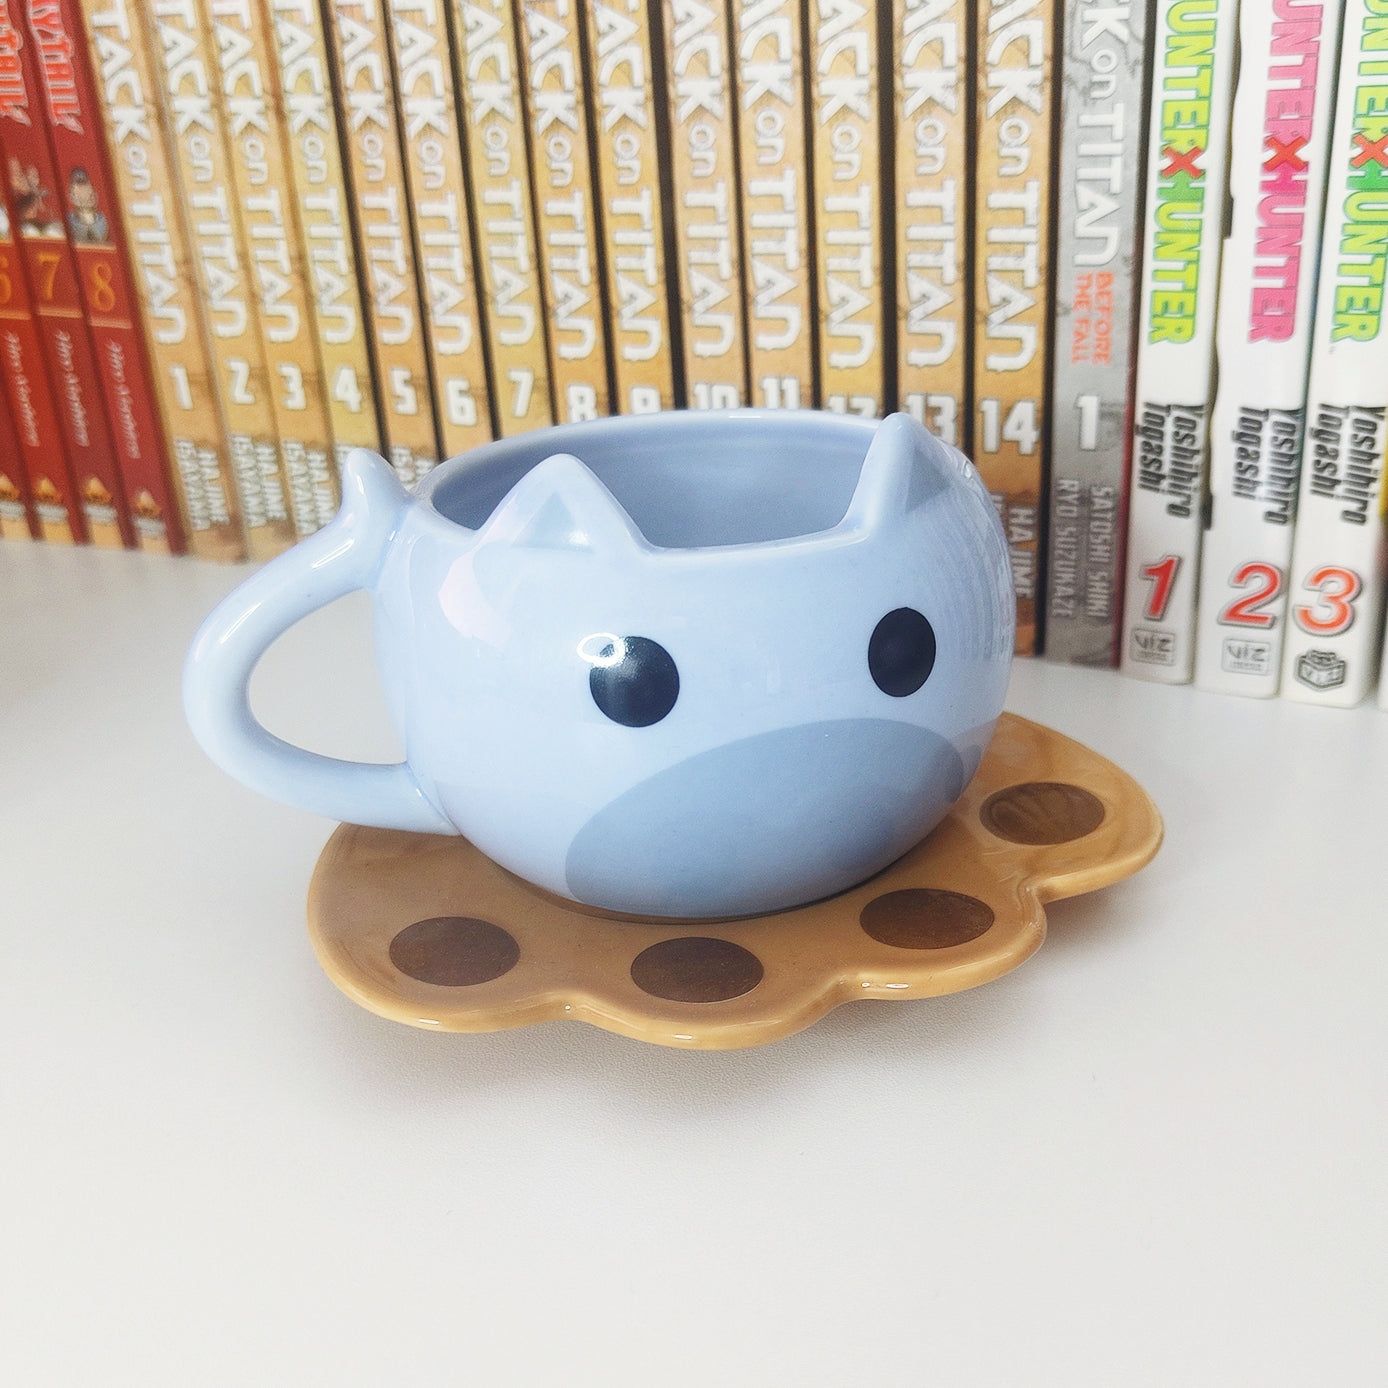 Curious Animal Ceramic Teacups